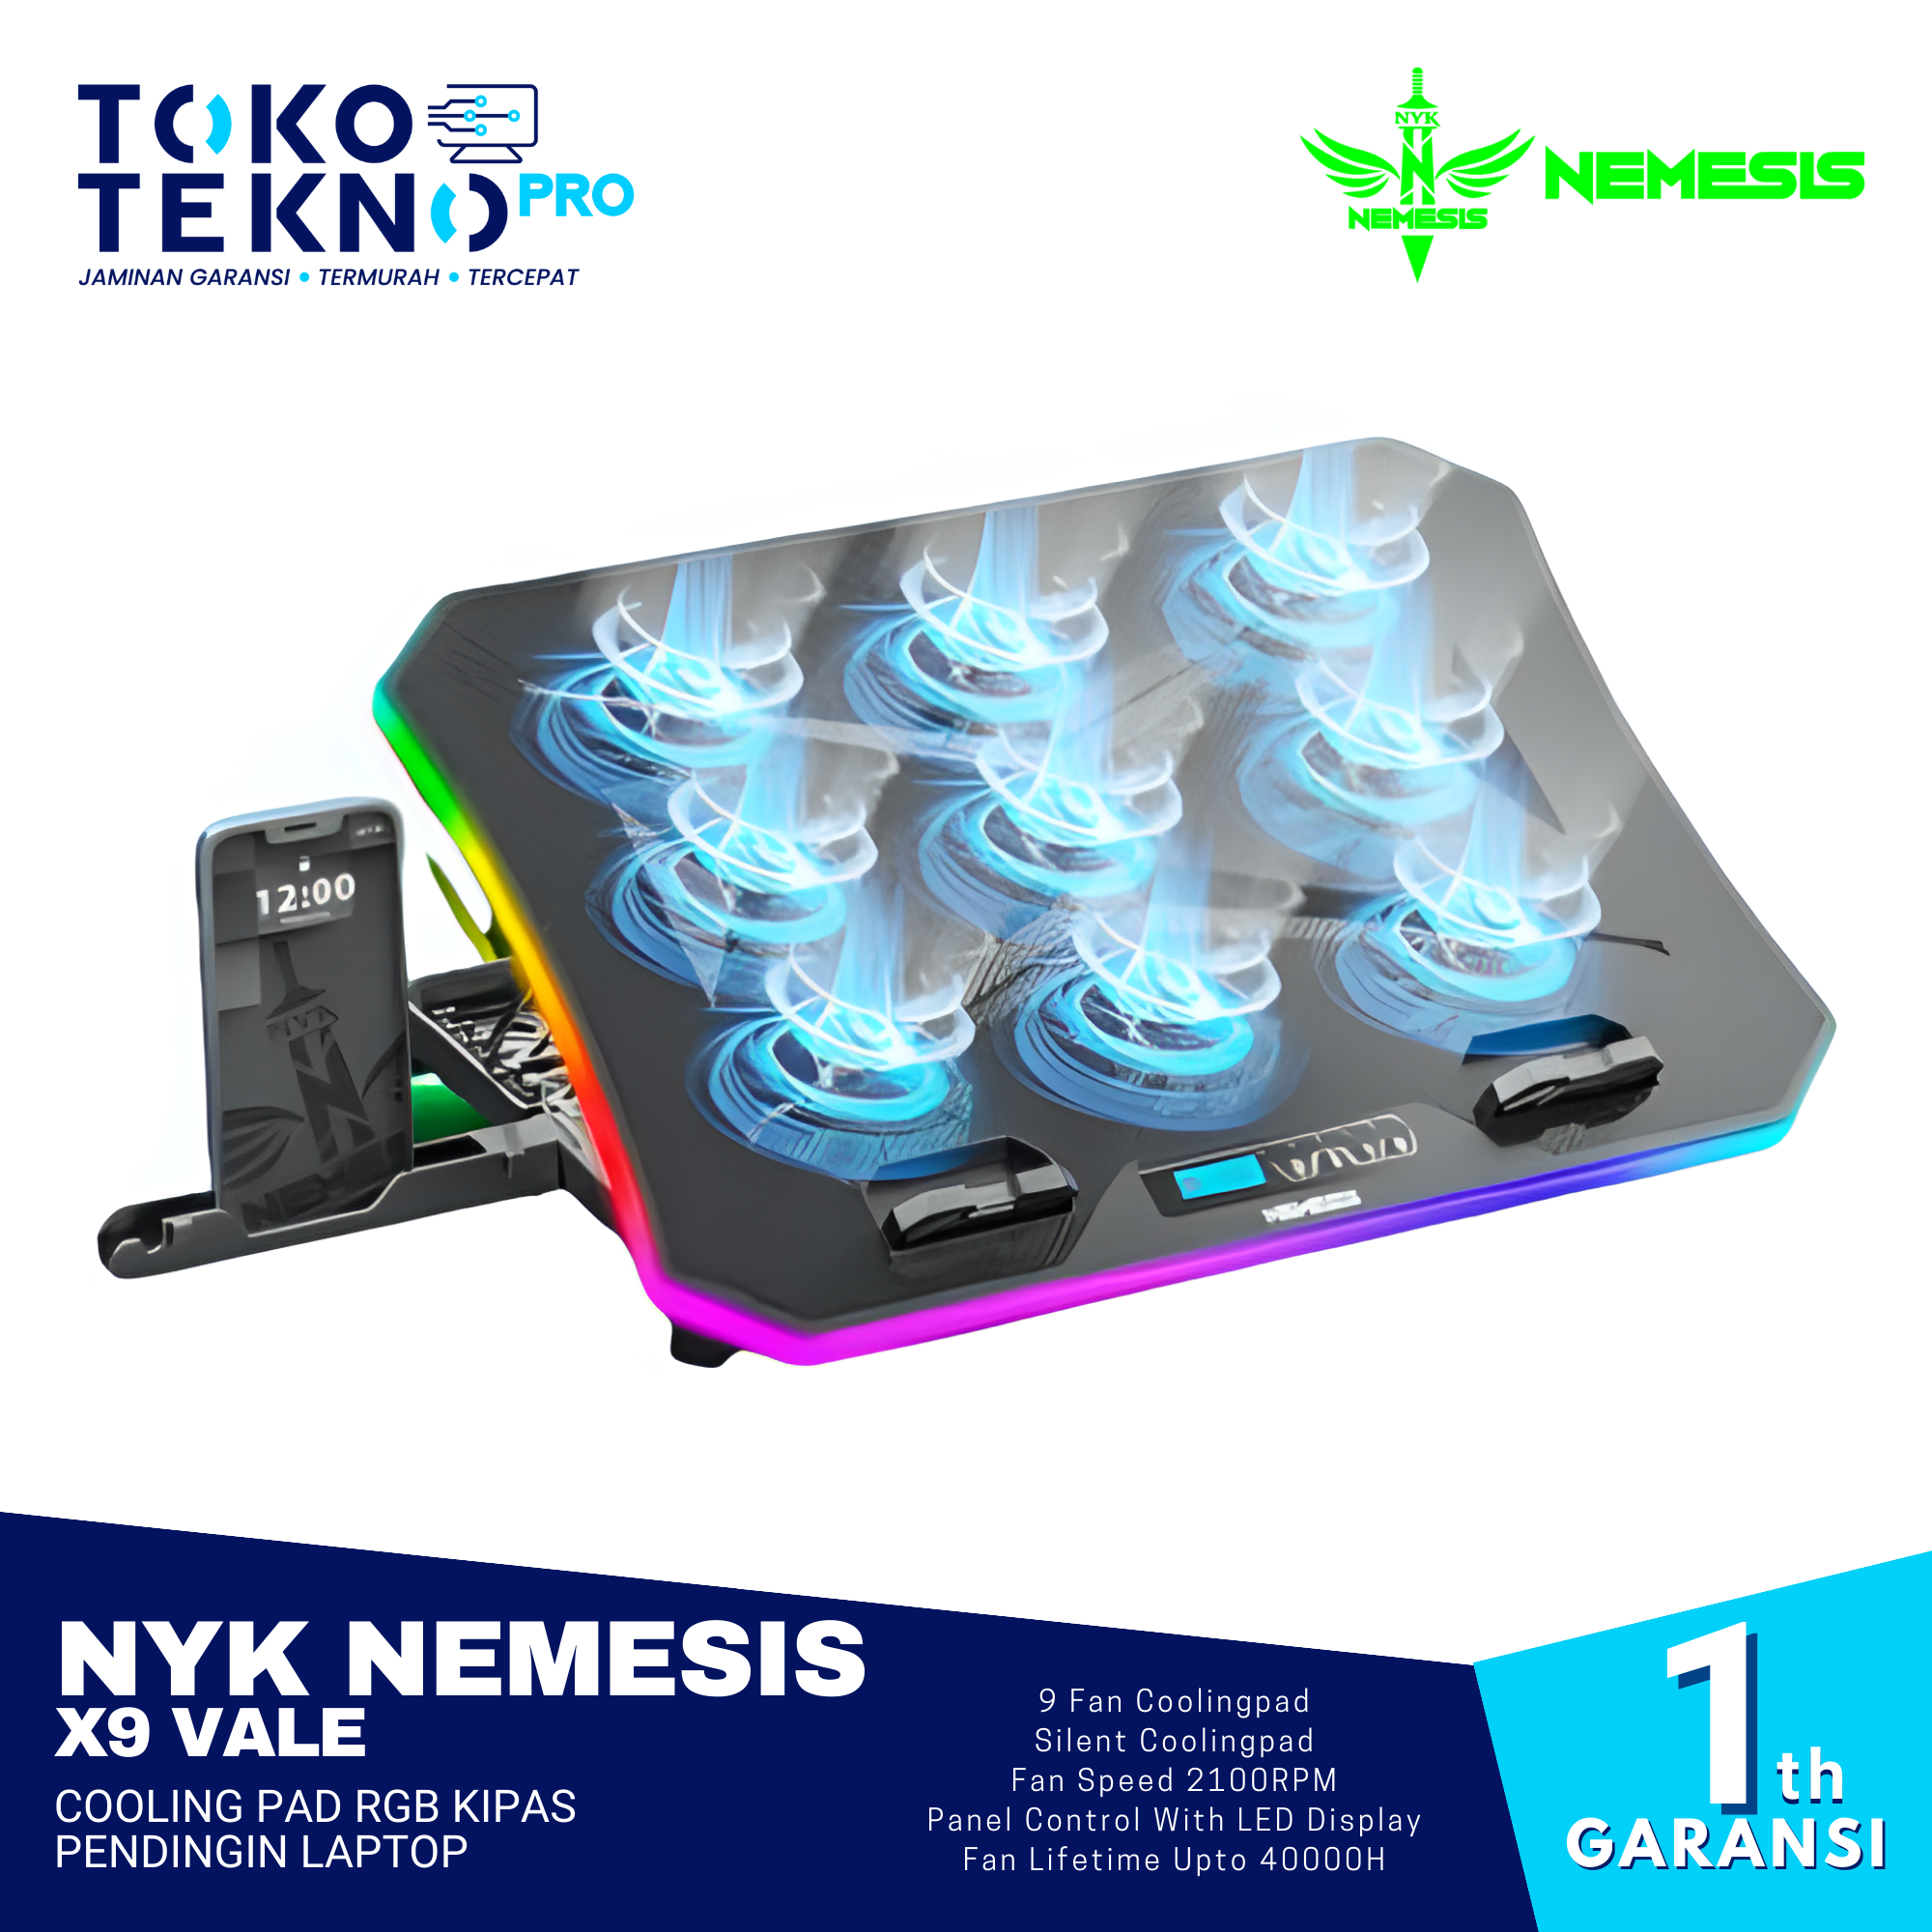 NYK Nemesis X9 Vale Cooling Pad RGB Kipas Pendingin Laptop